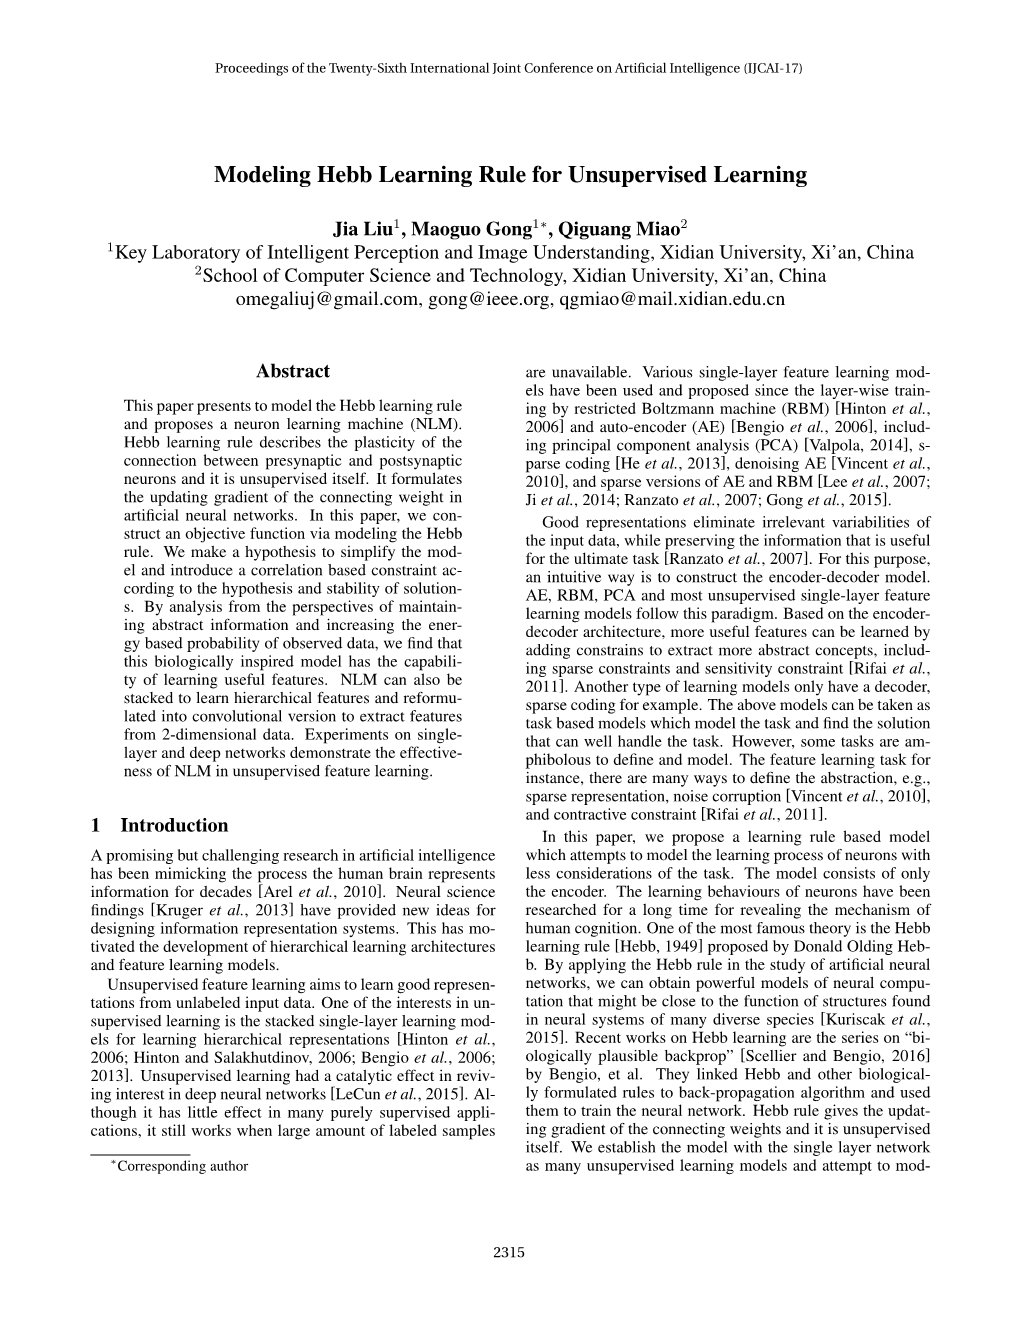 Modeling Hebb Learning Rule for Unsupervised Learning